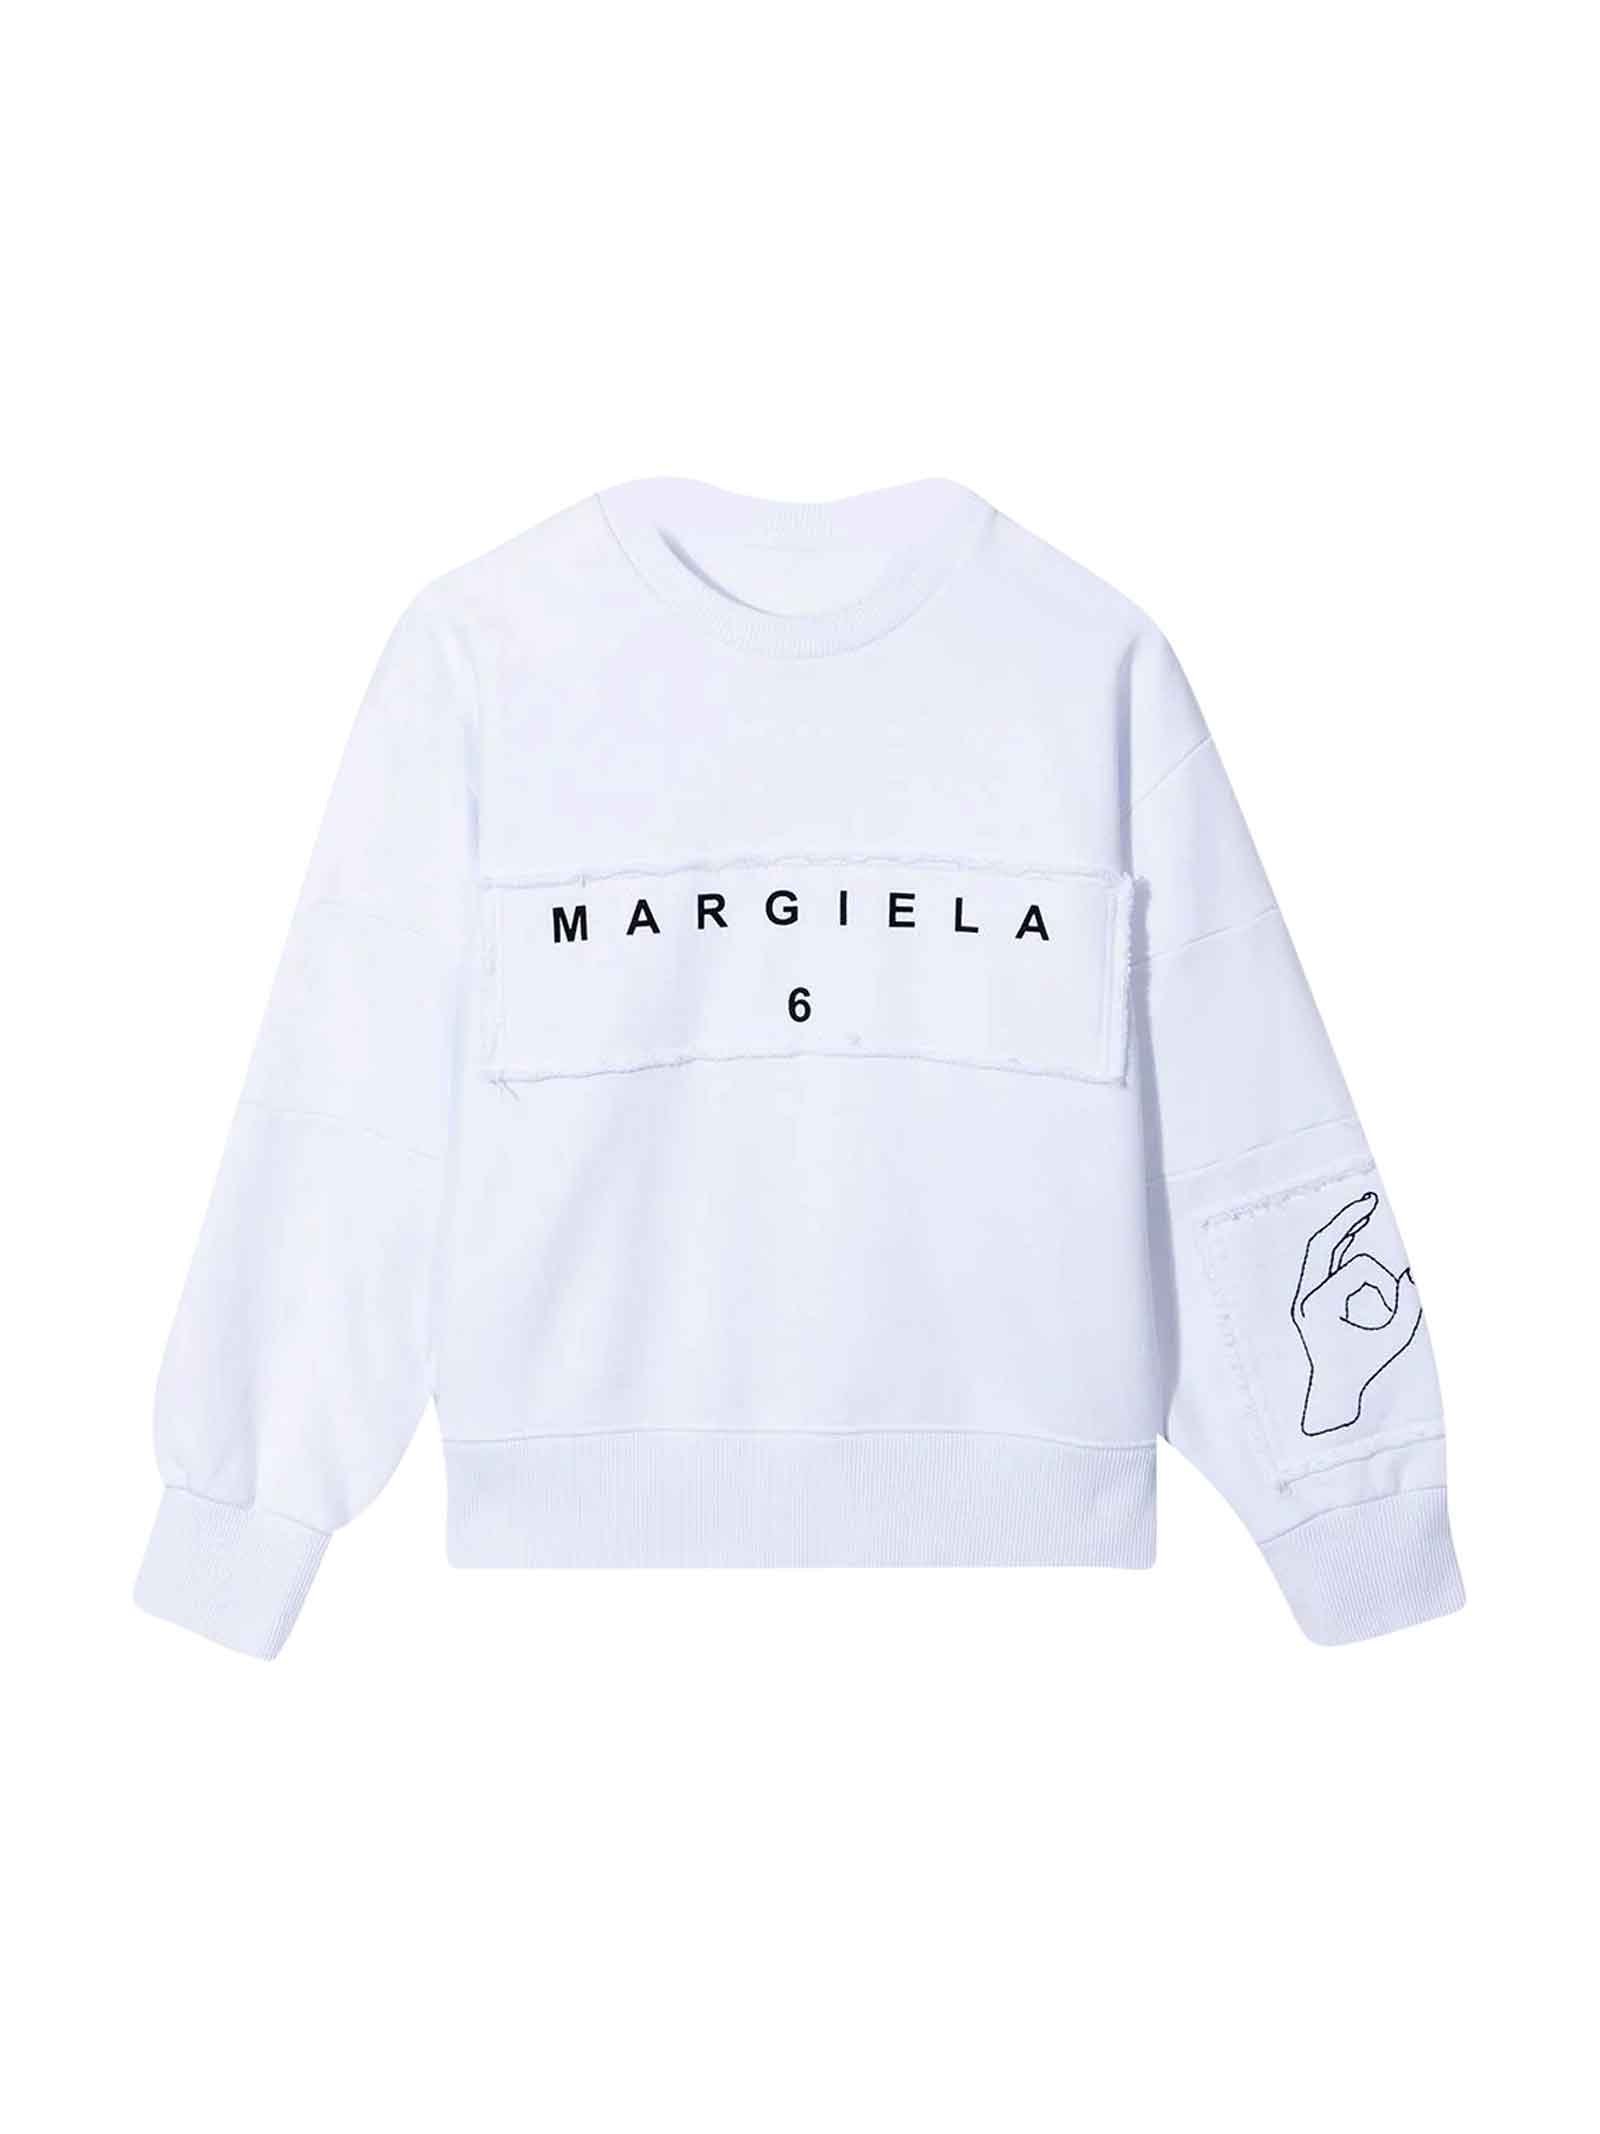 MM6 Maison Margiela White Sweatshirt